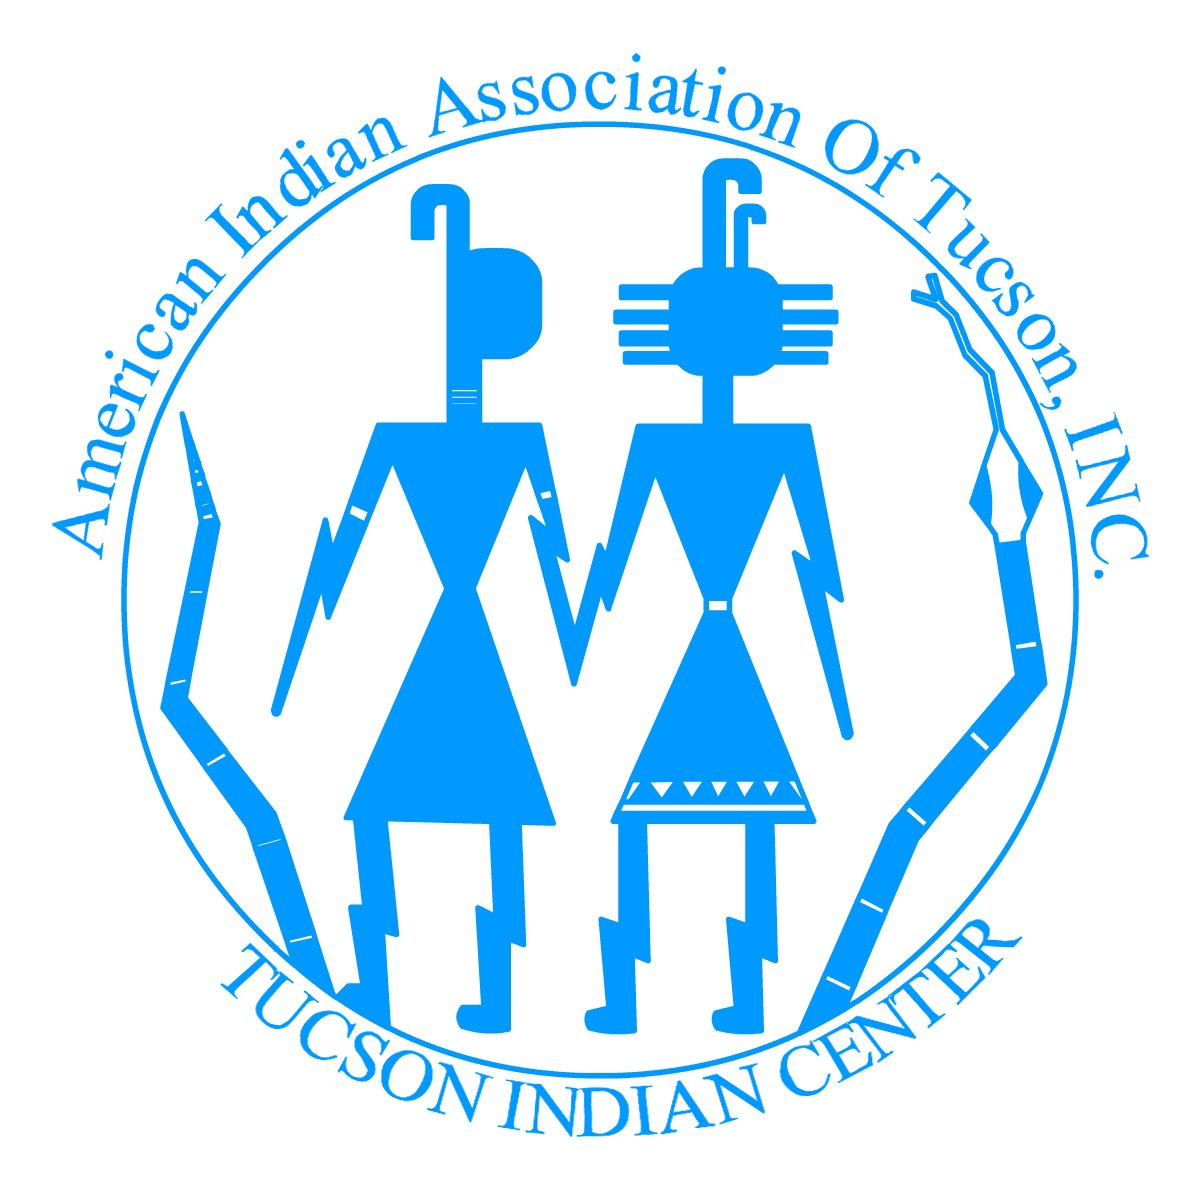 Native American Organizations in Arizona - Tucson Indian Center